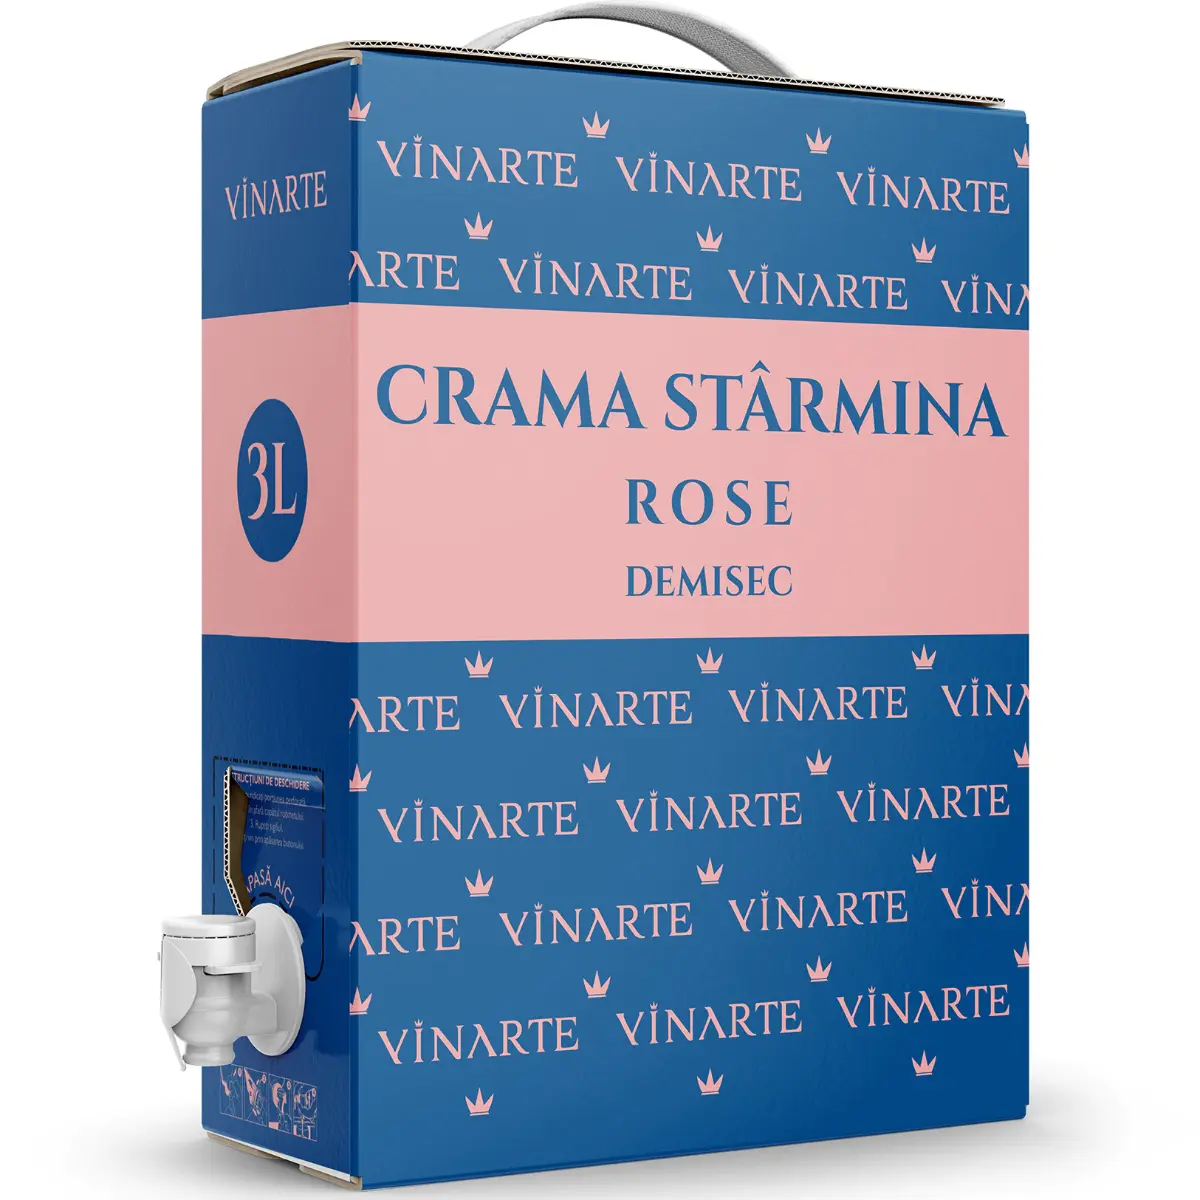 Vin rose Vinarte, Crama Starmina Demisec, 3L